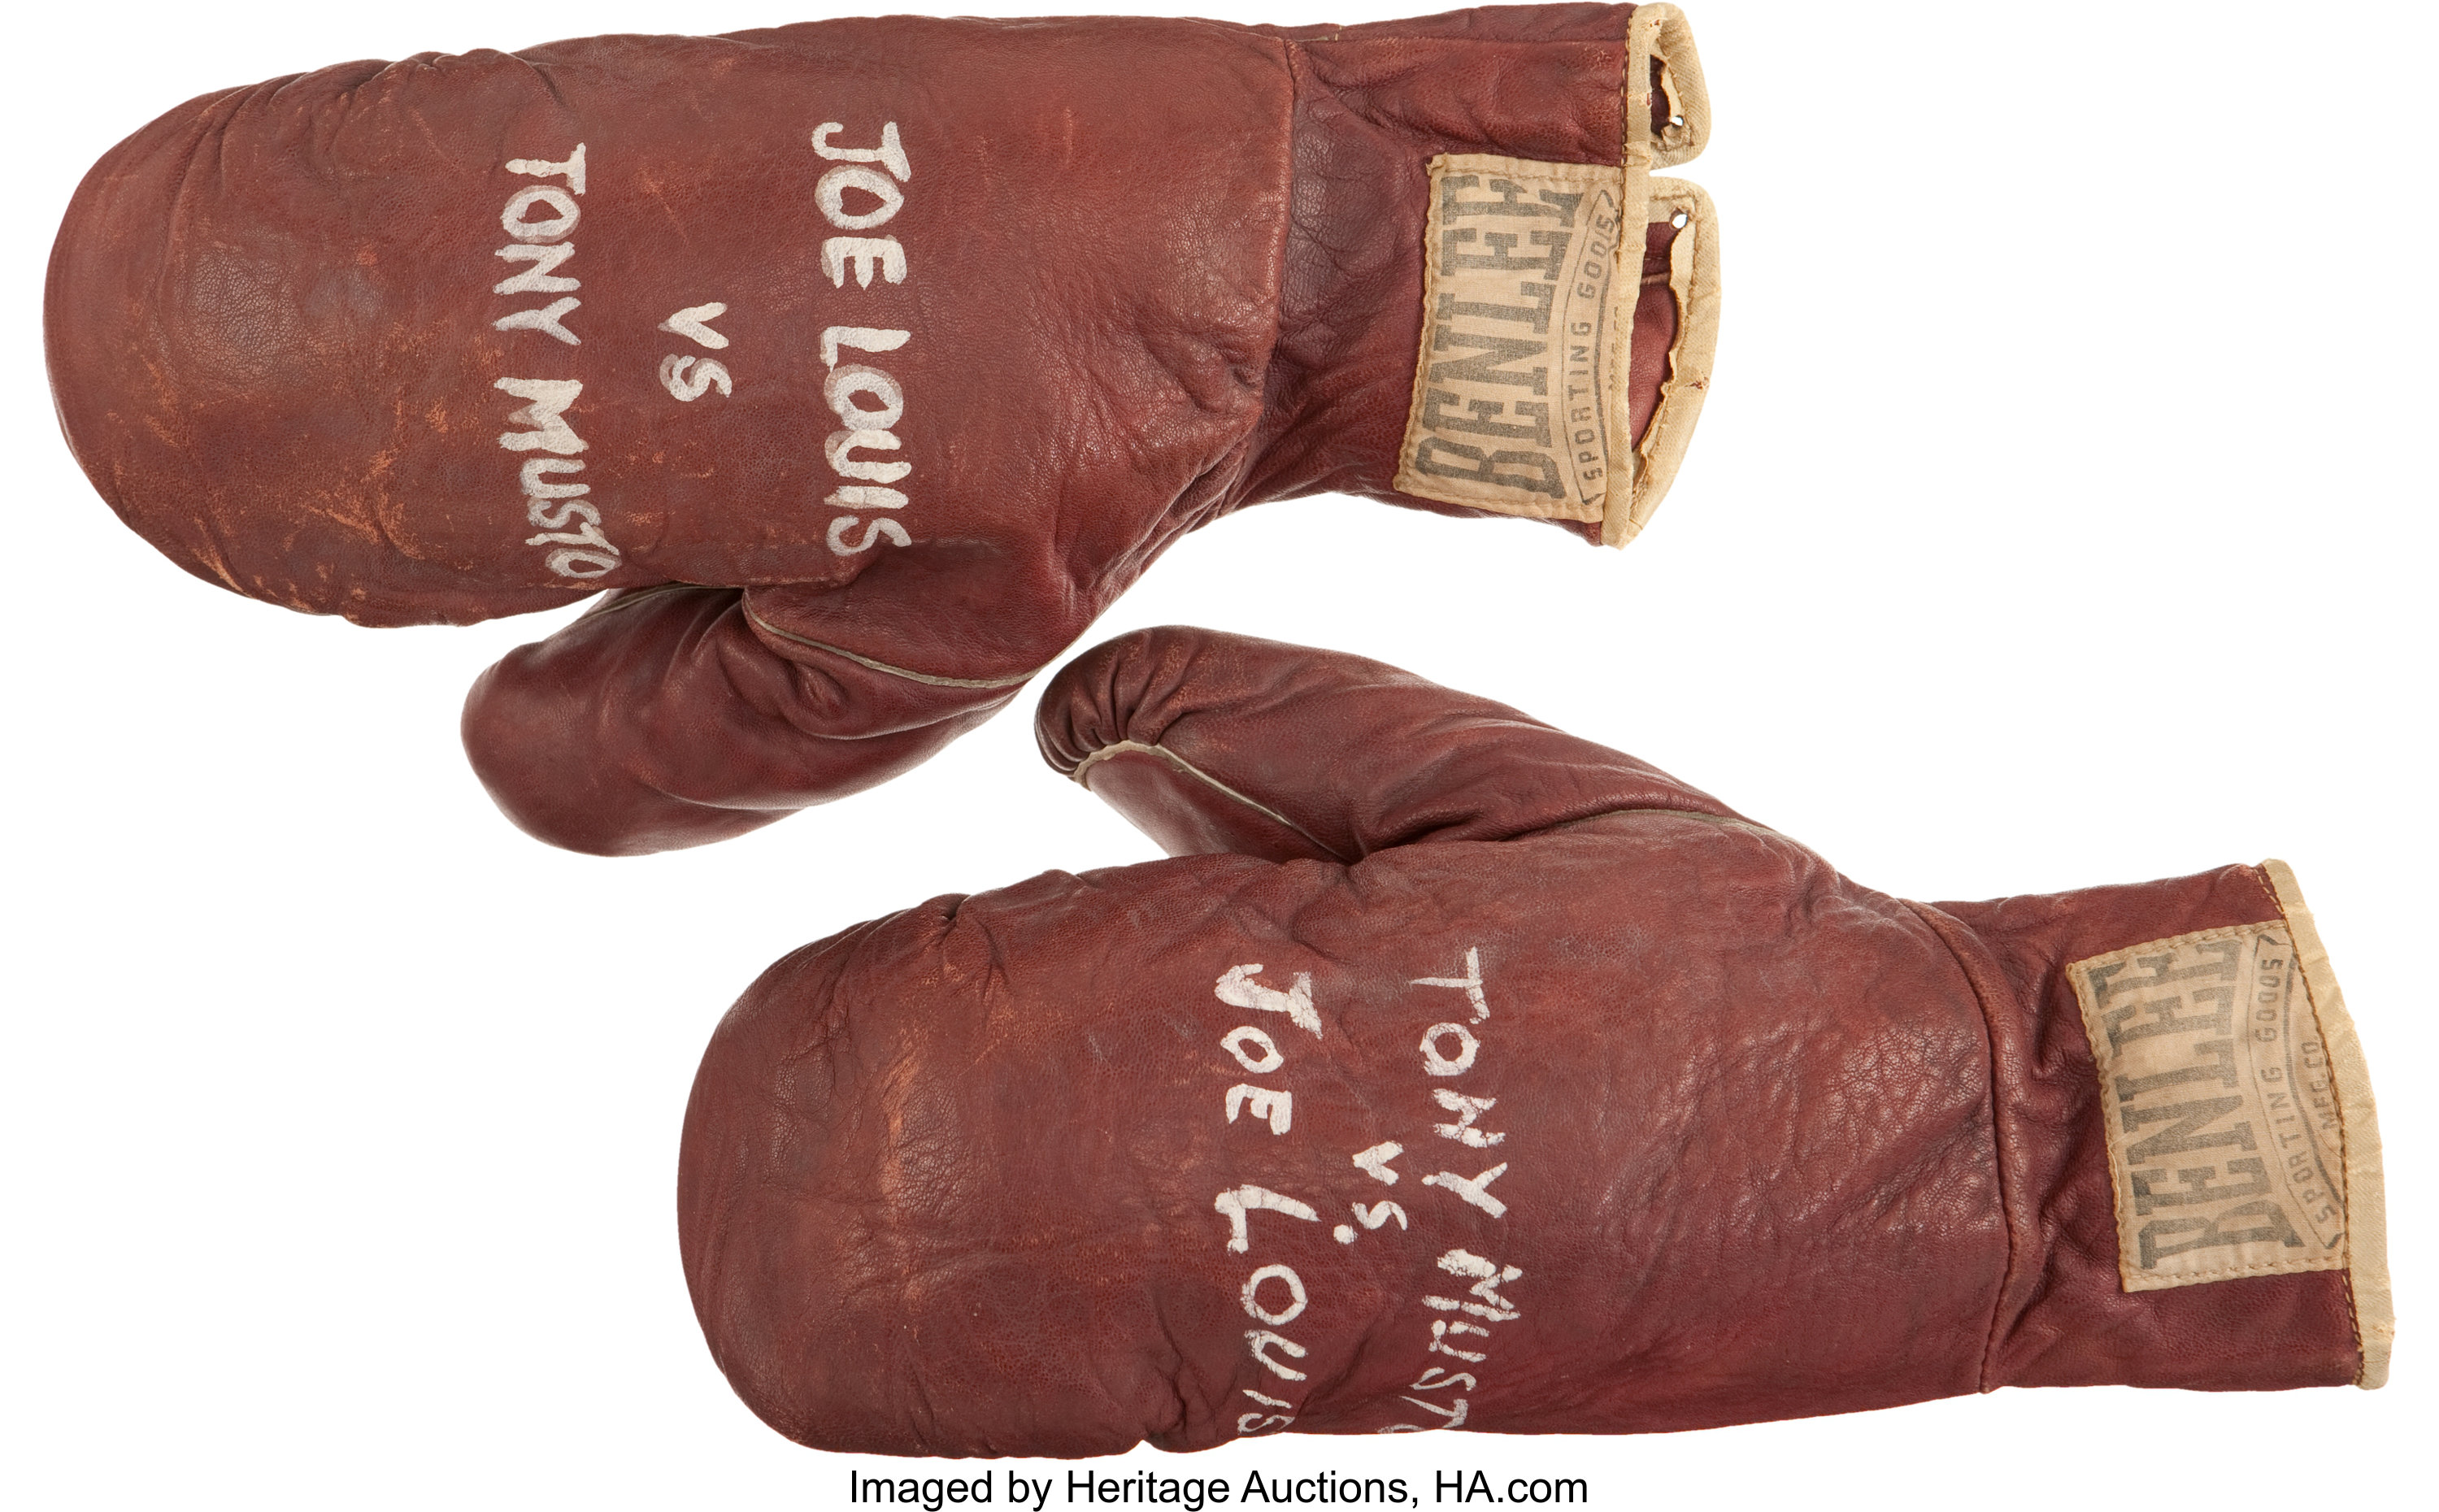 1941 Joe Louis vs. Tony Musto Fight Worn Gloves from the Ring